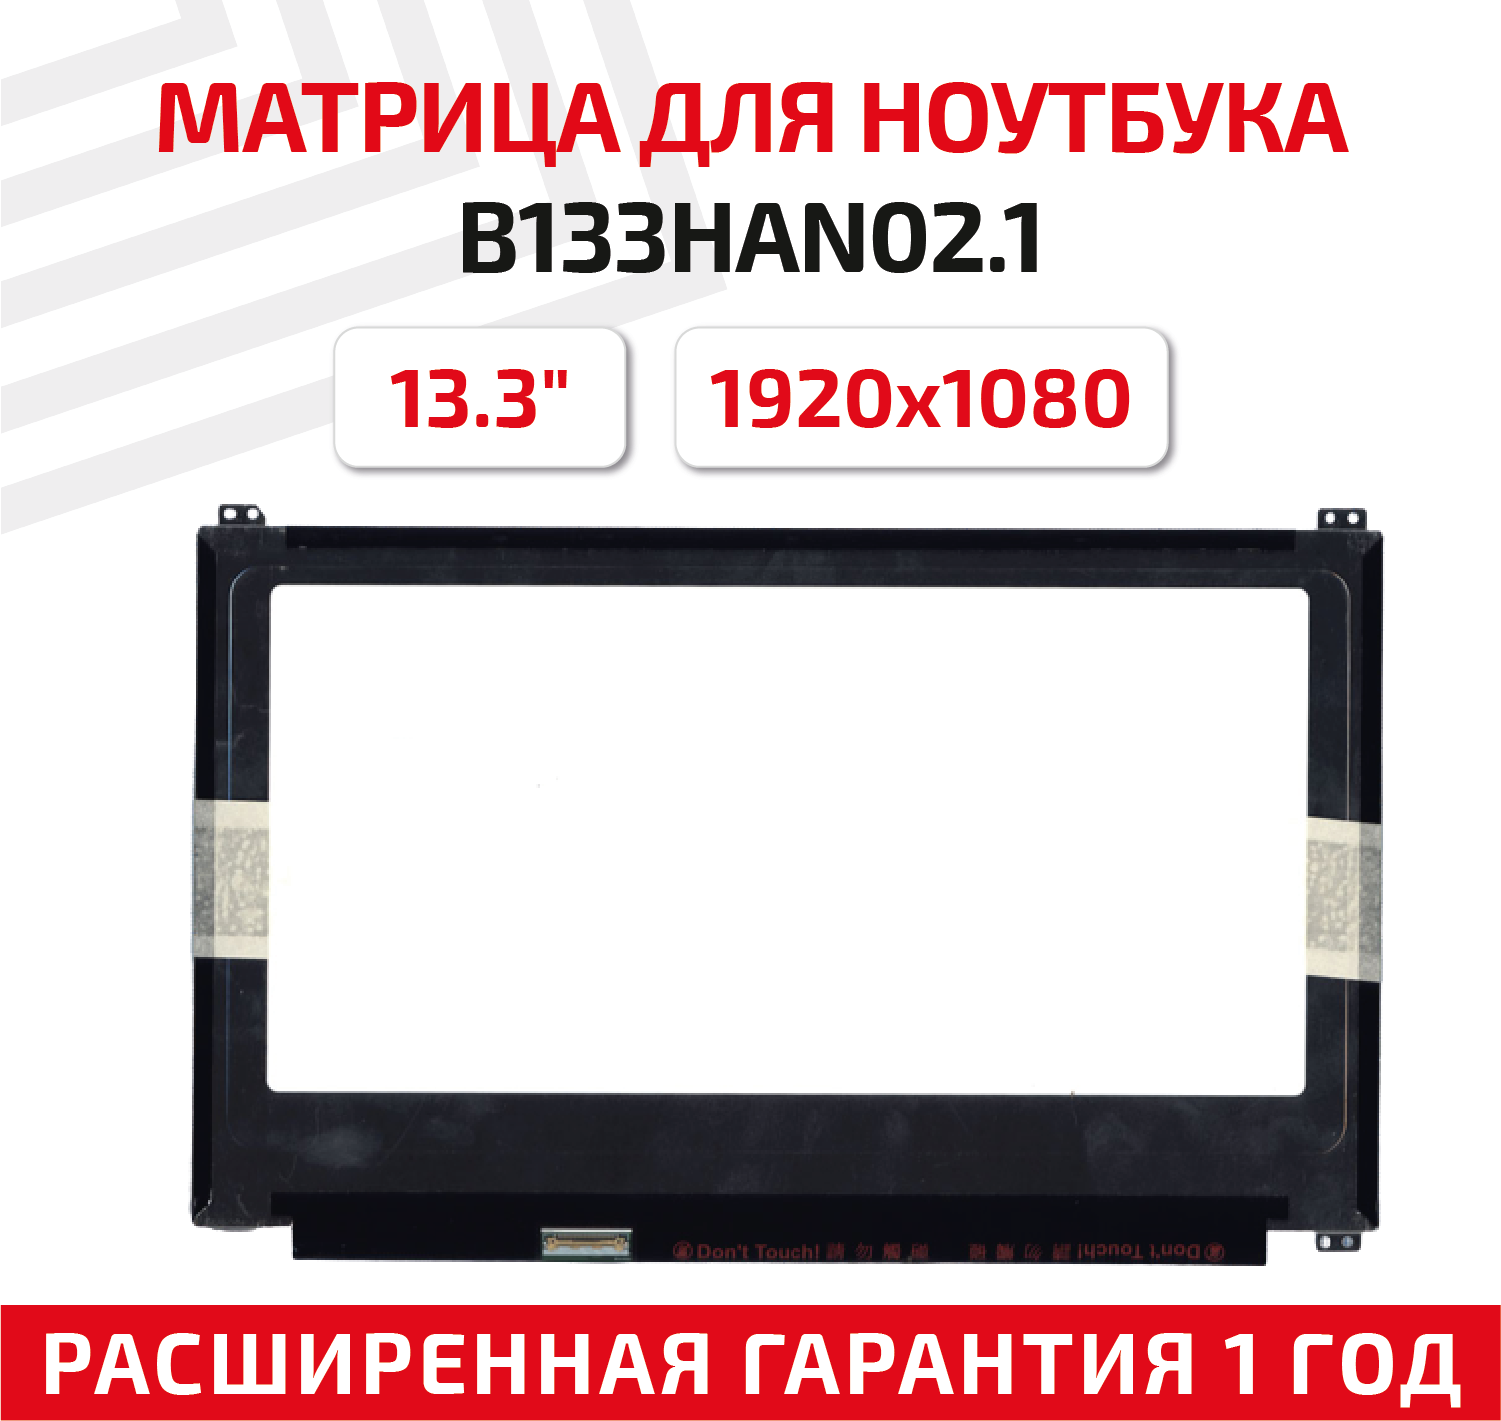 Матрица (экран) для ноутбука B133HAN02.1, 13.3", 1920x1080, Slim (тонкая), 30-pin, светодиодная (LED), матовая